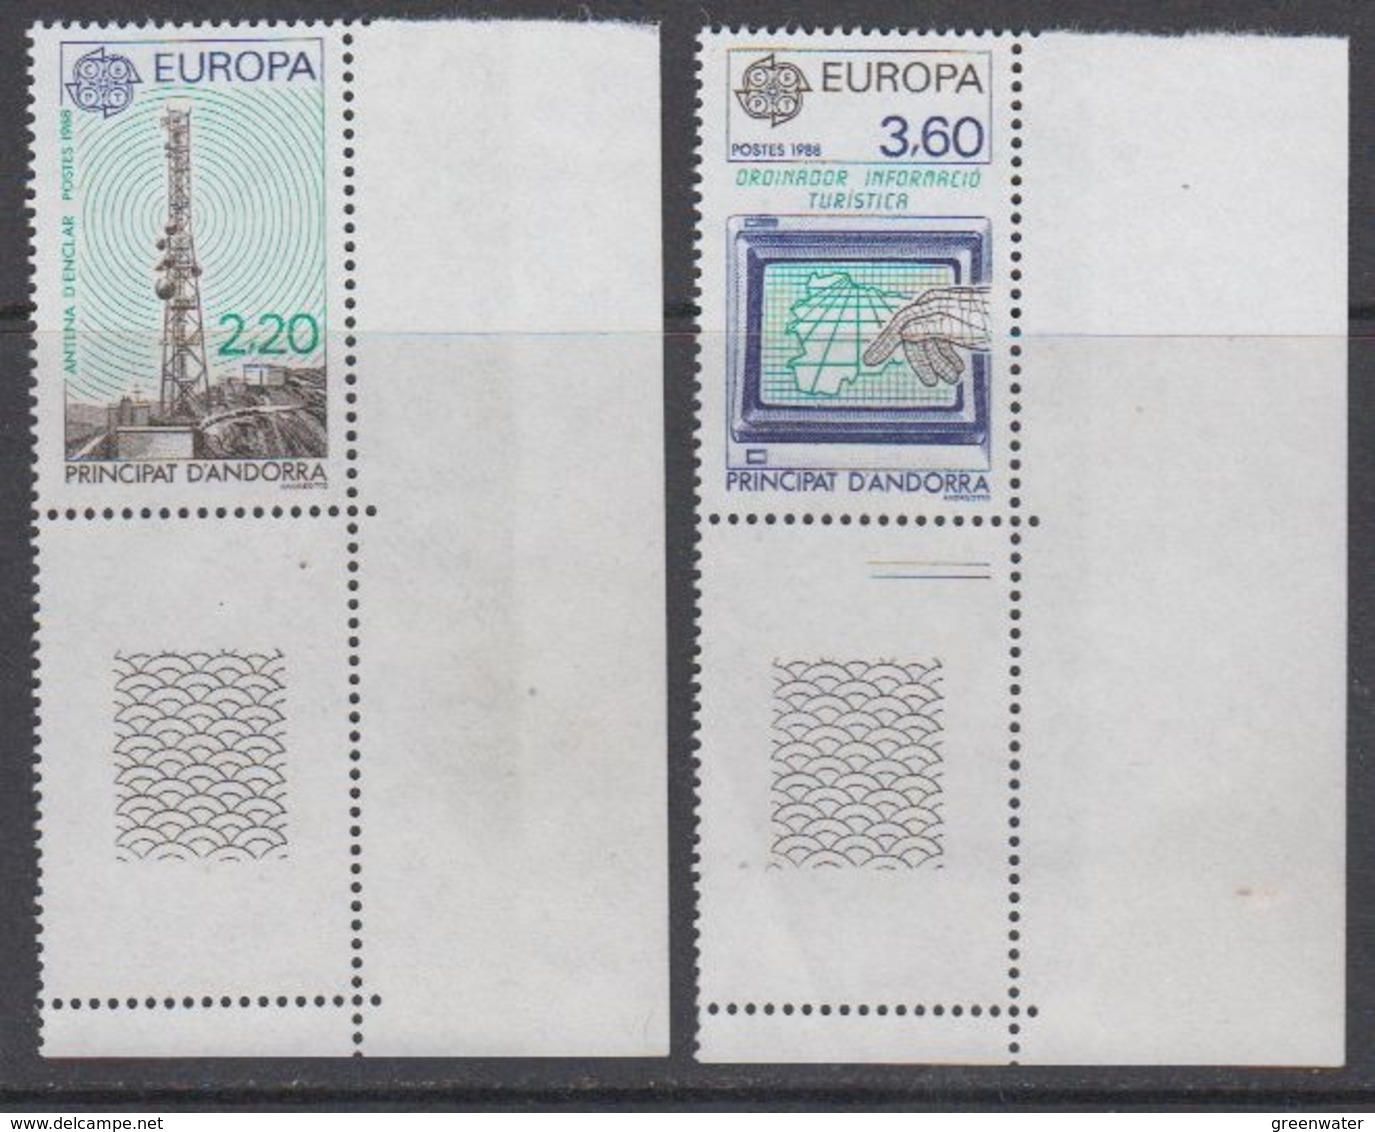 Europa Cept 1988 Andorra Fr 2v (corners) ** Mnh (44687) - 1988